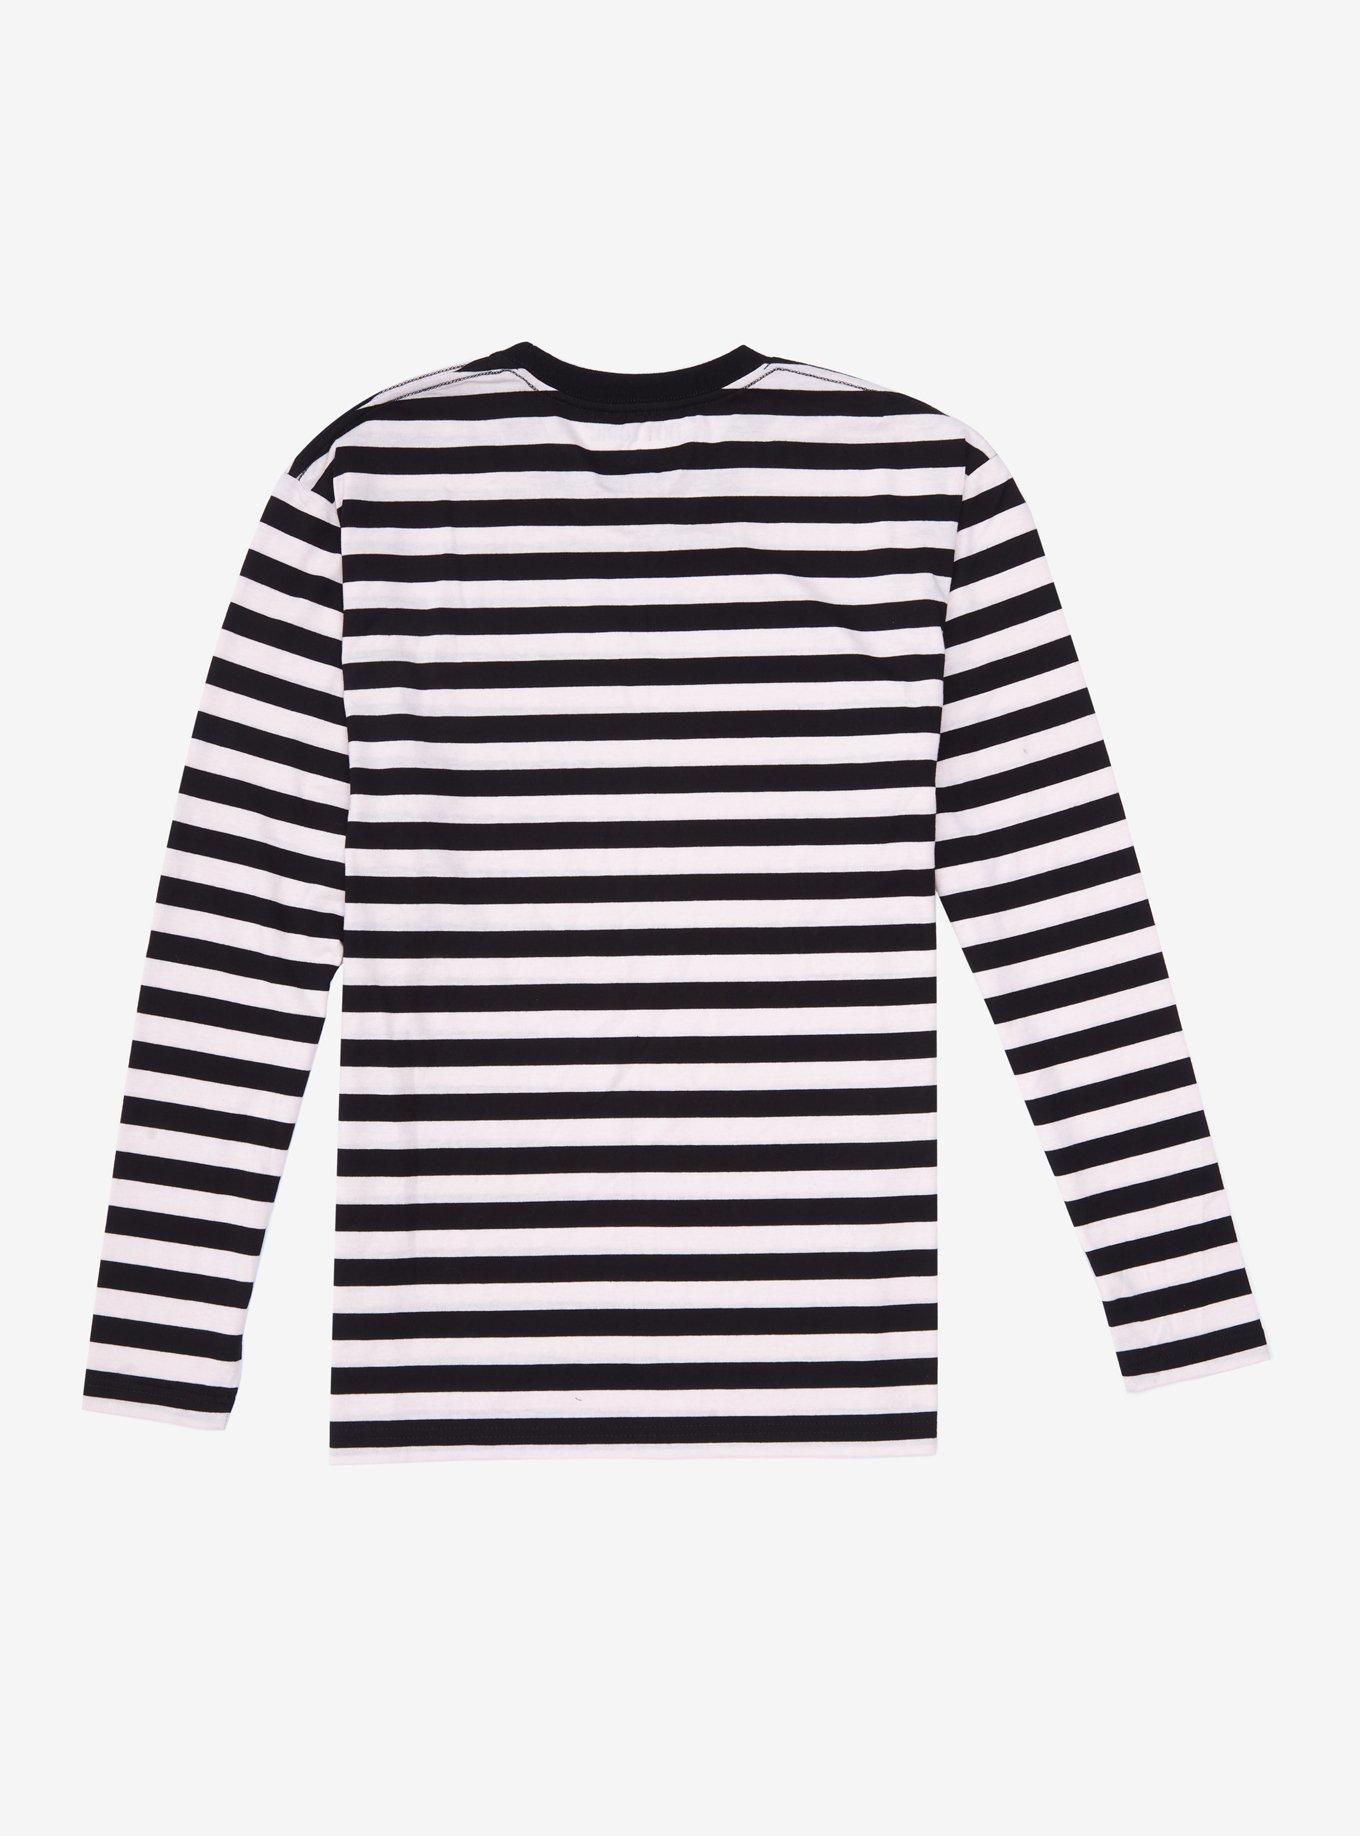 Pastel Pink & Black Stripe Long-Sleeve T-Shirt, STRIPE - MULTI, alternate